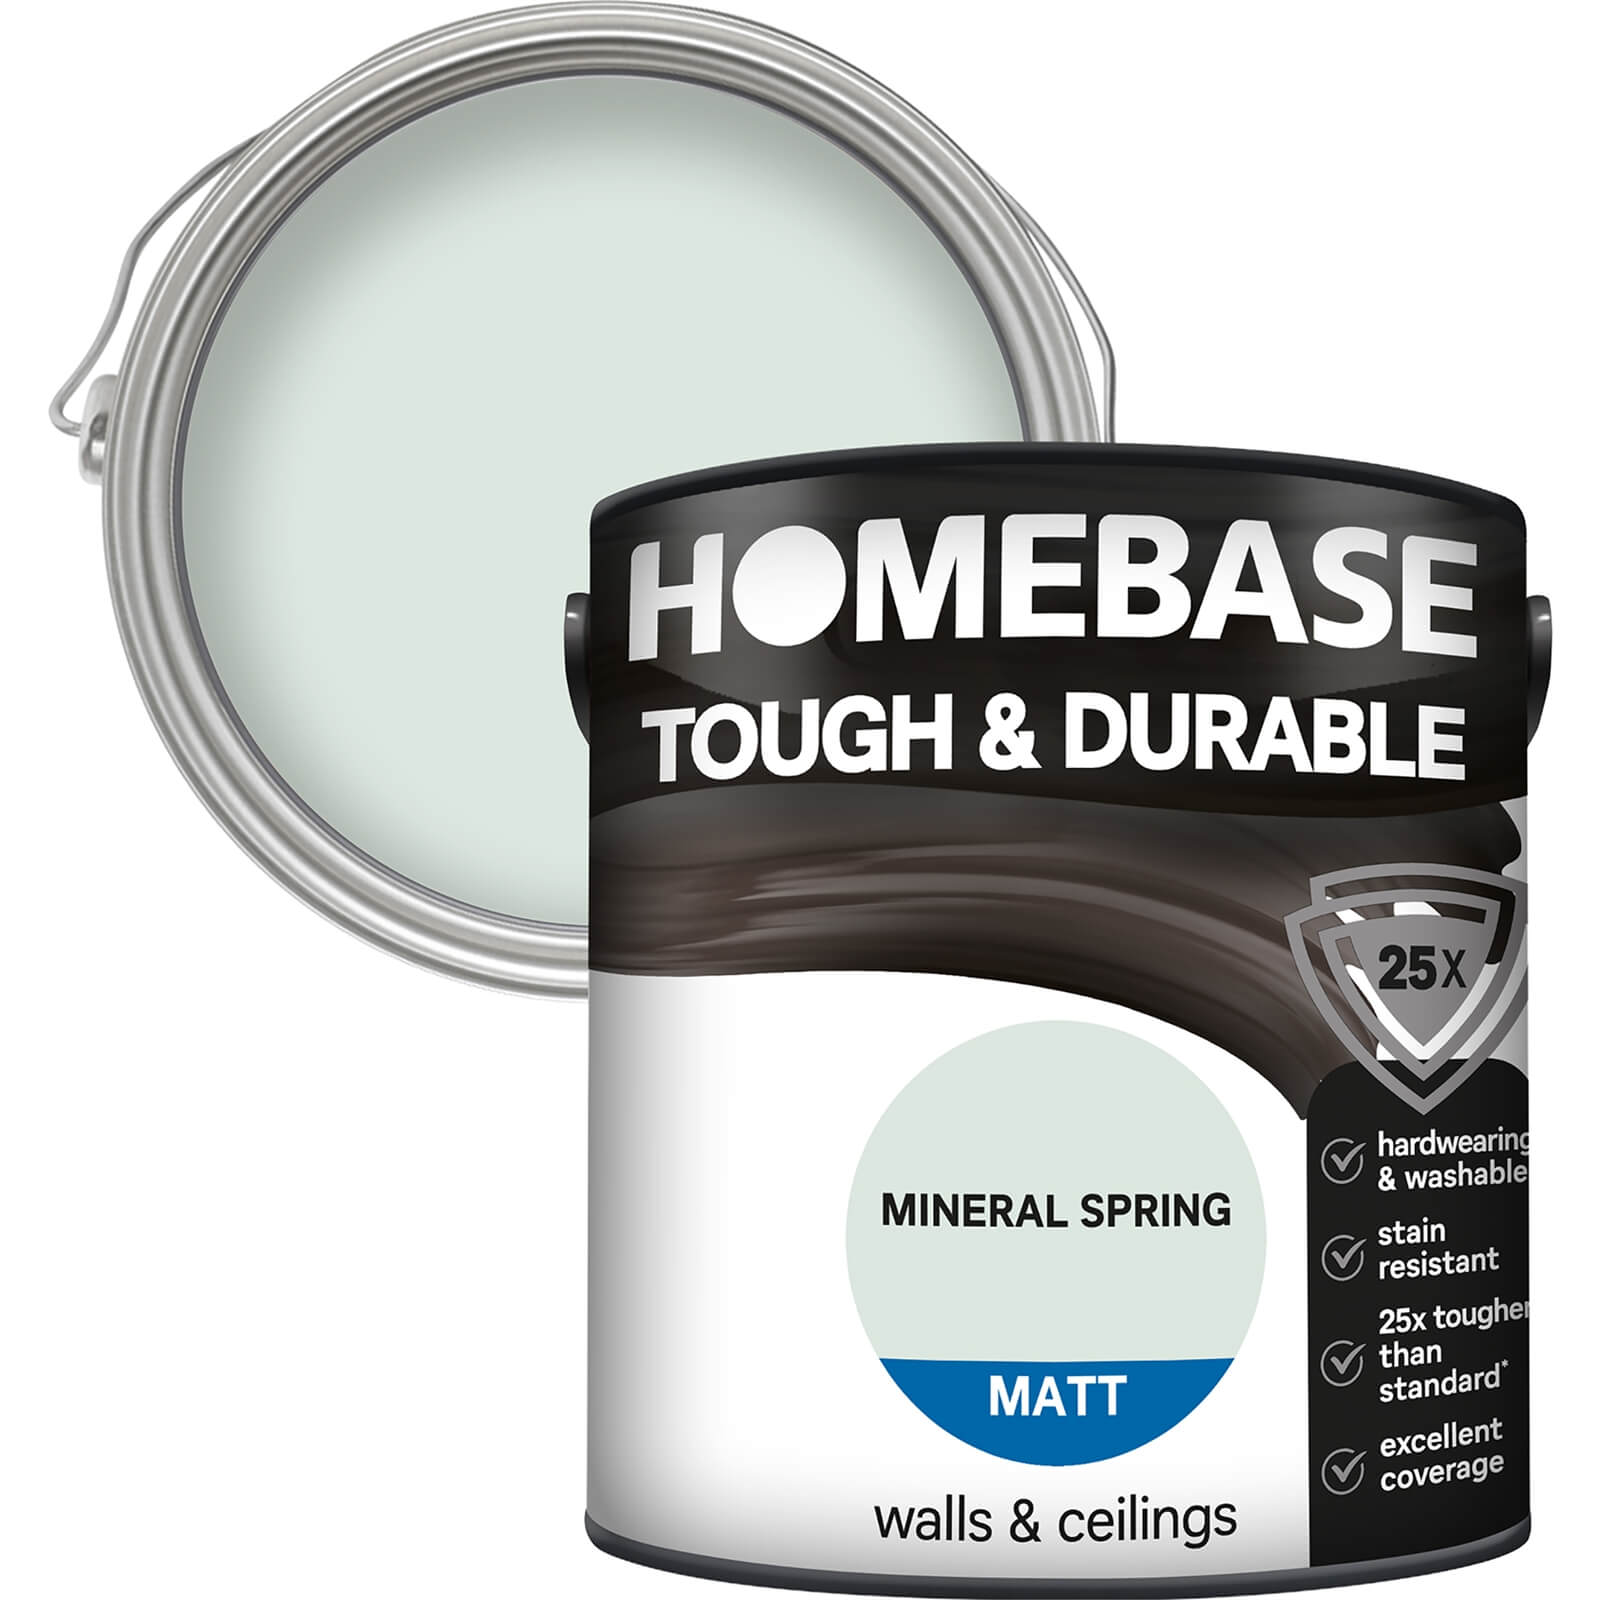 Homebase Tough & Durable Matt Paint Mineral Spring - 2.5L